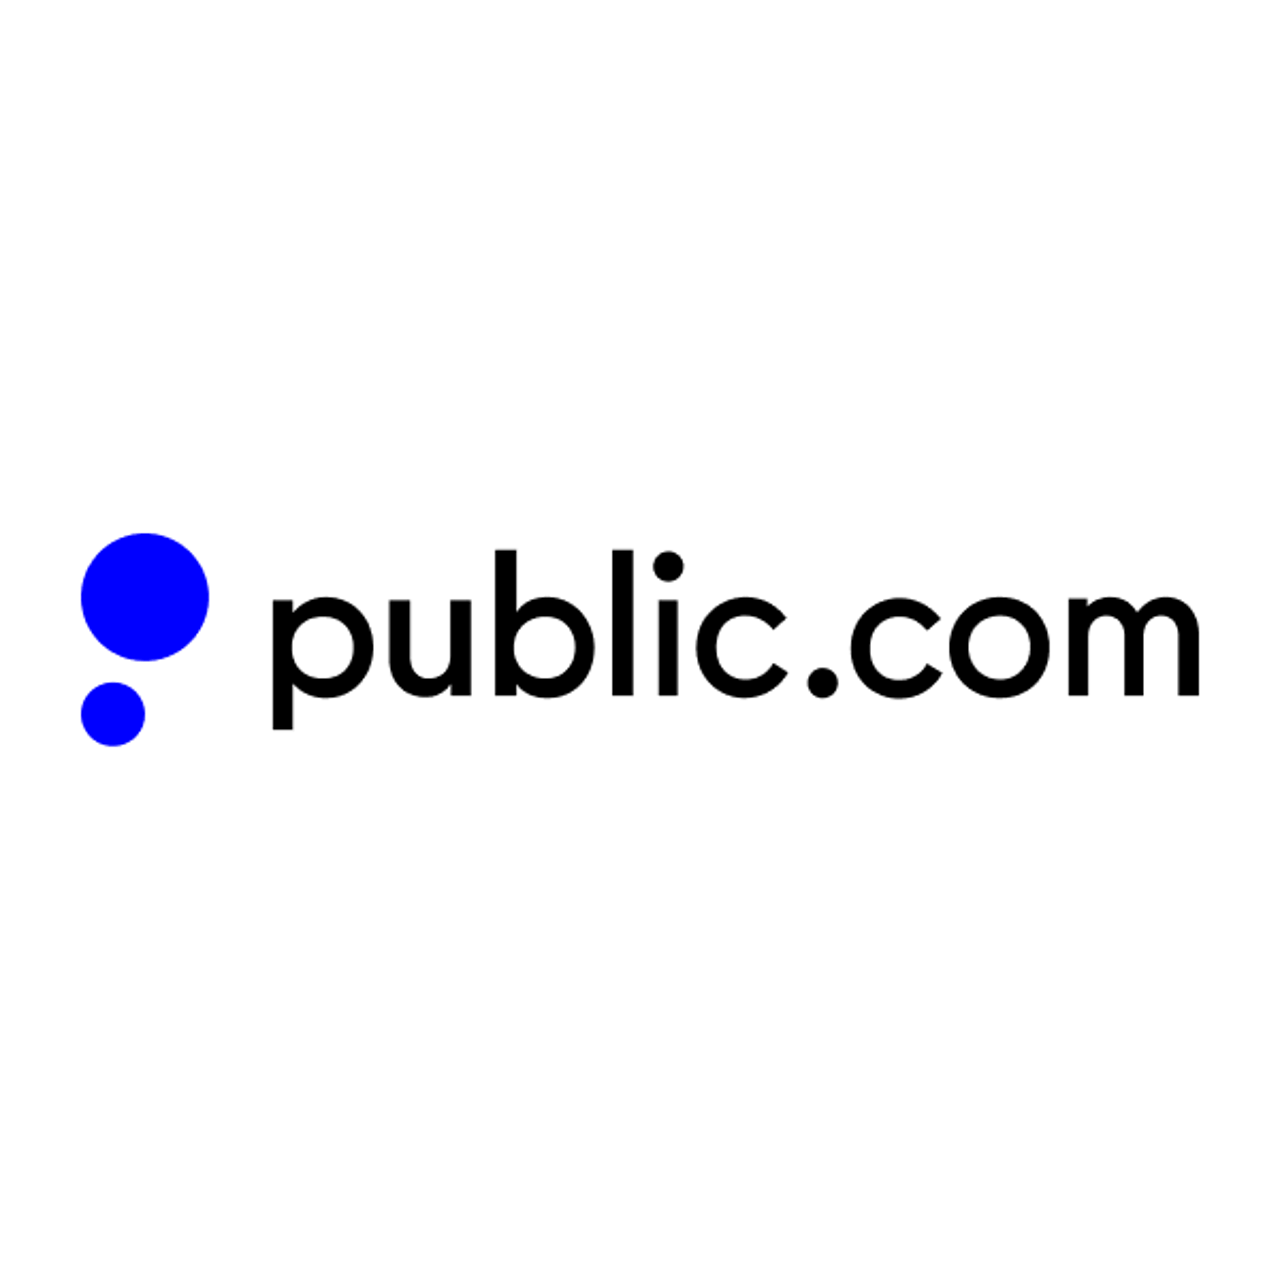 public.com